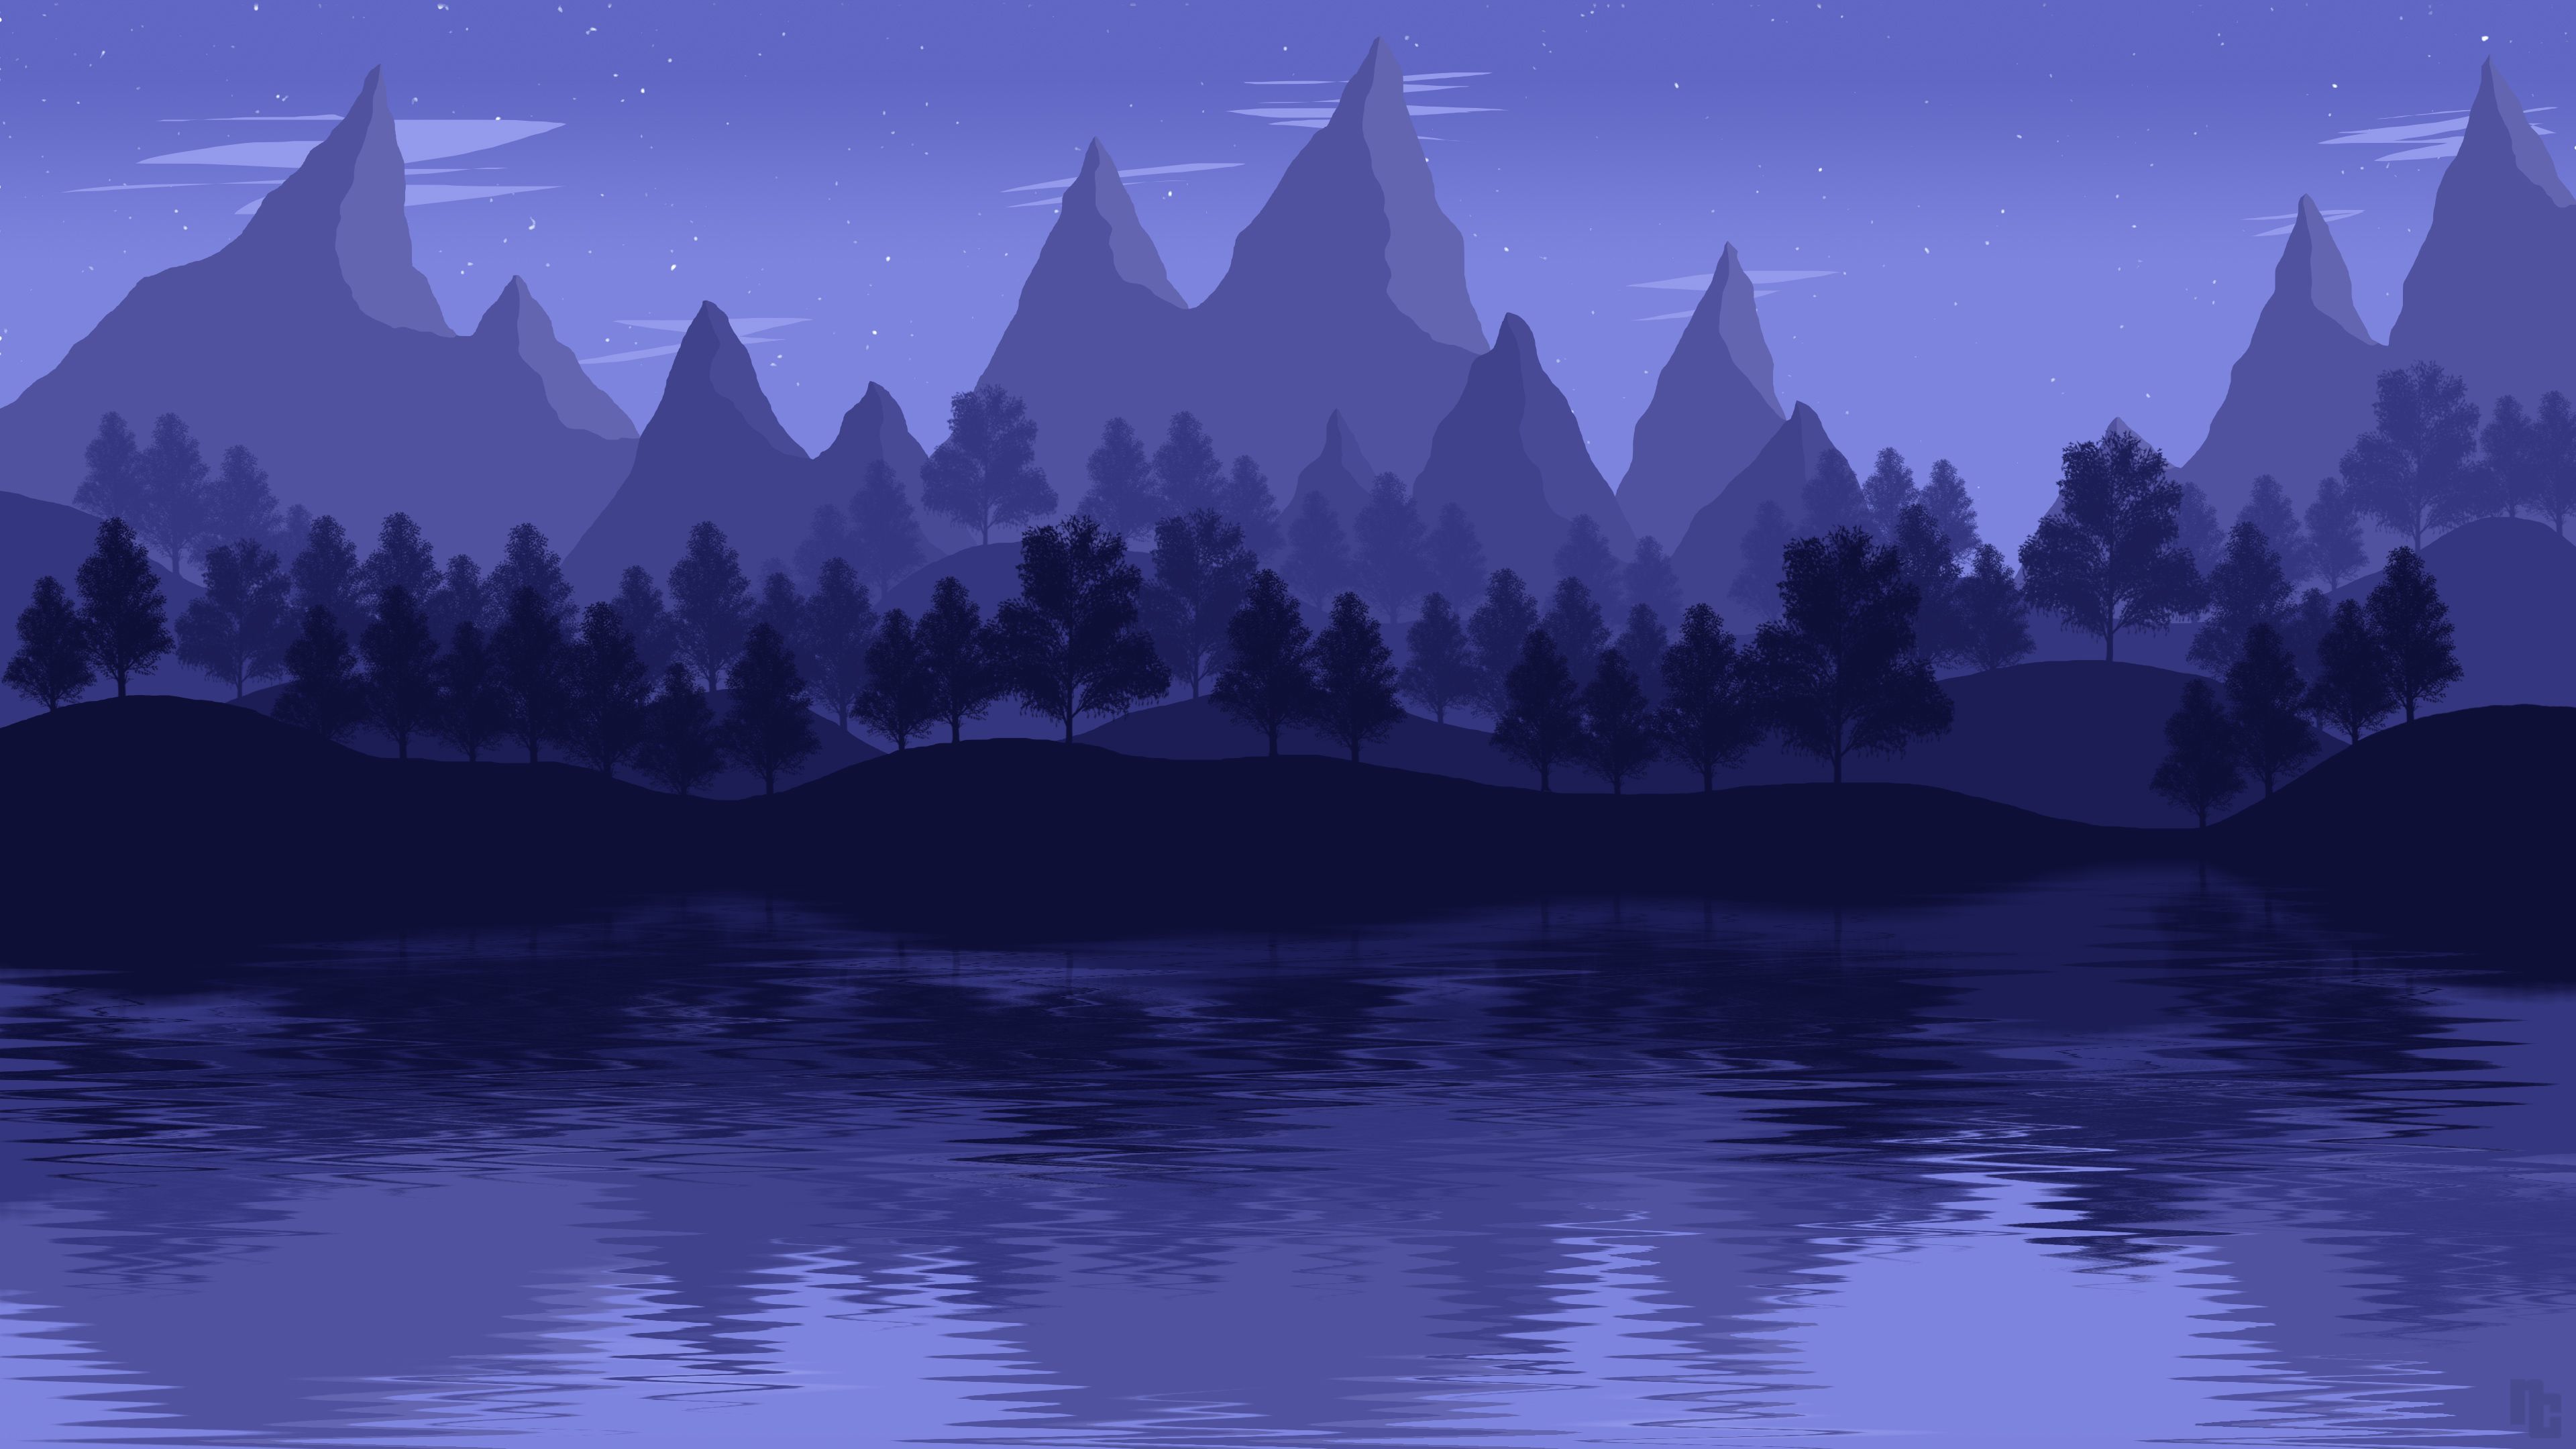 Animated Landscape Wallpapers - 4k, HD Animated Landscape Backgrounds